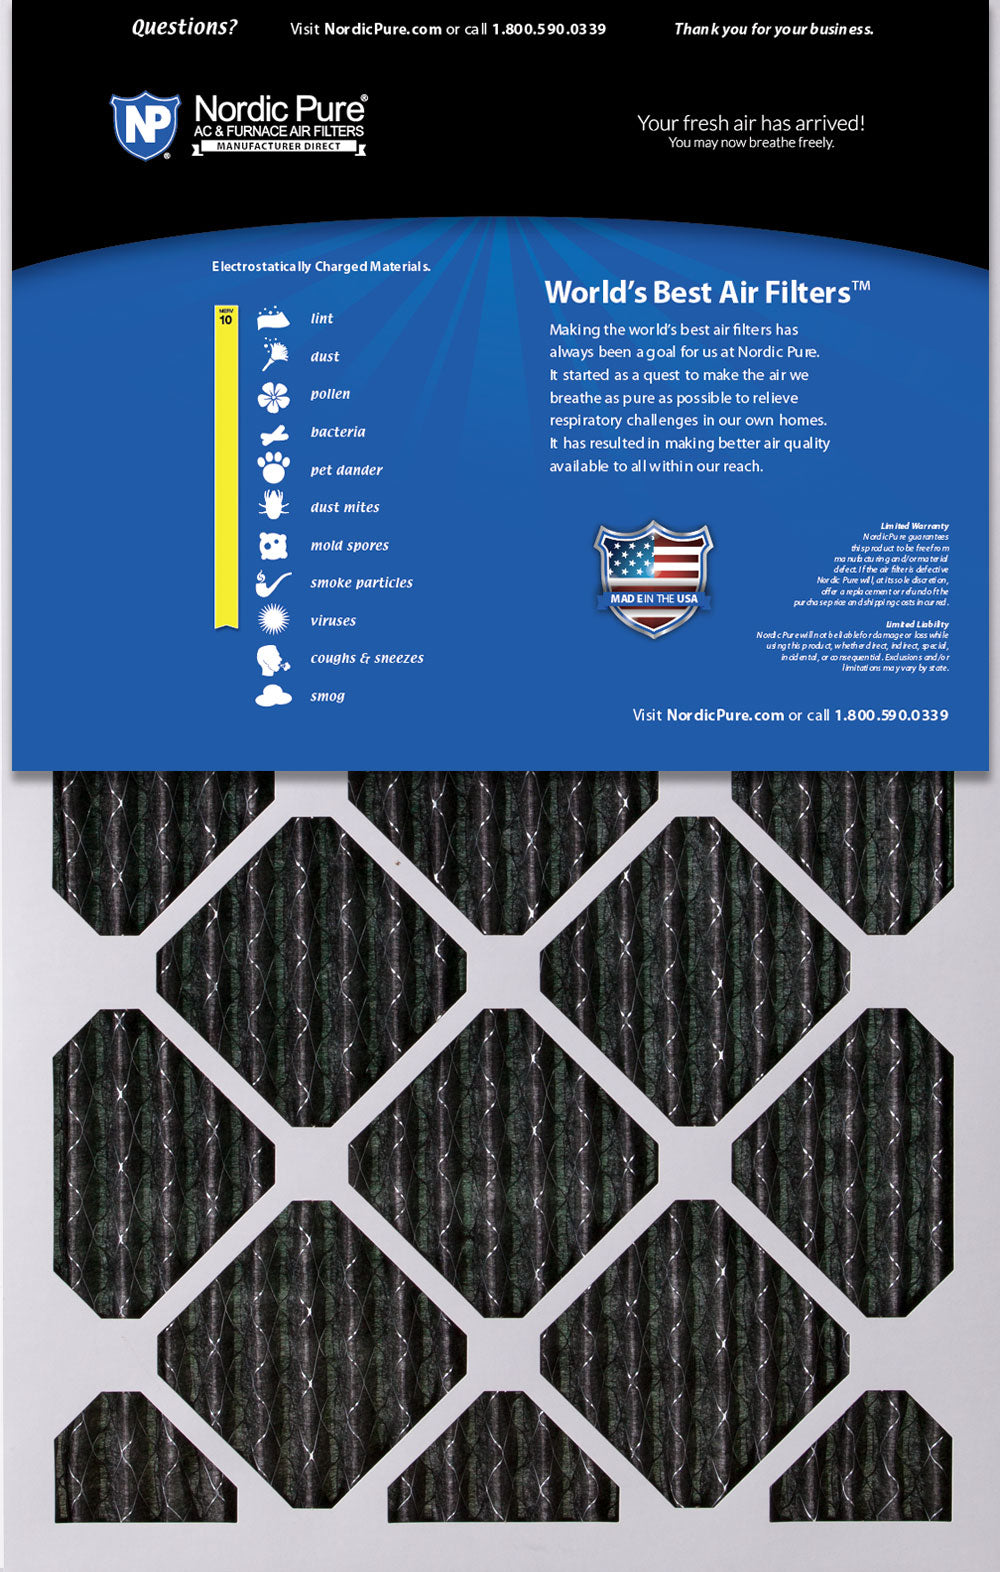 11 1/4x19 1/4x1 Exact MERV 10 Plus Carbon AC Furnace Filters 